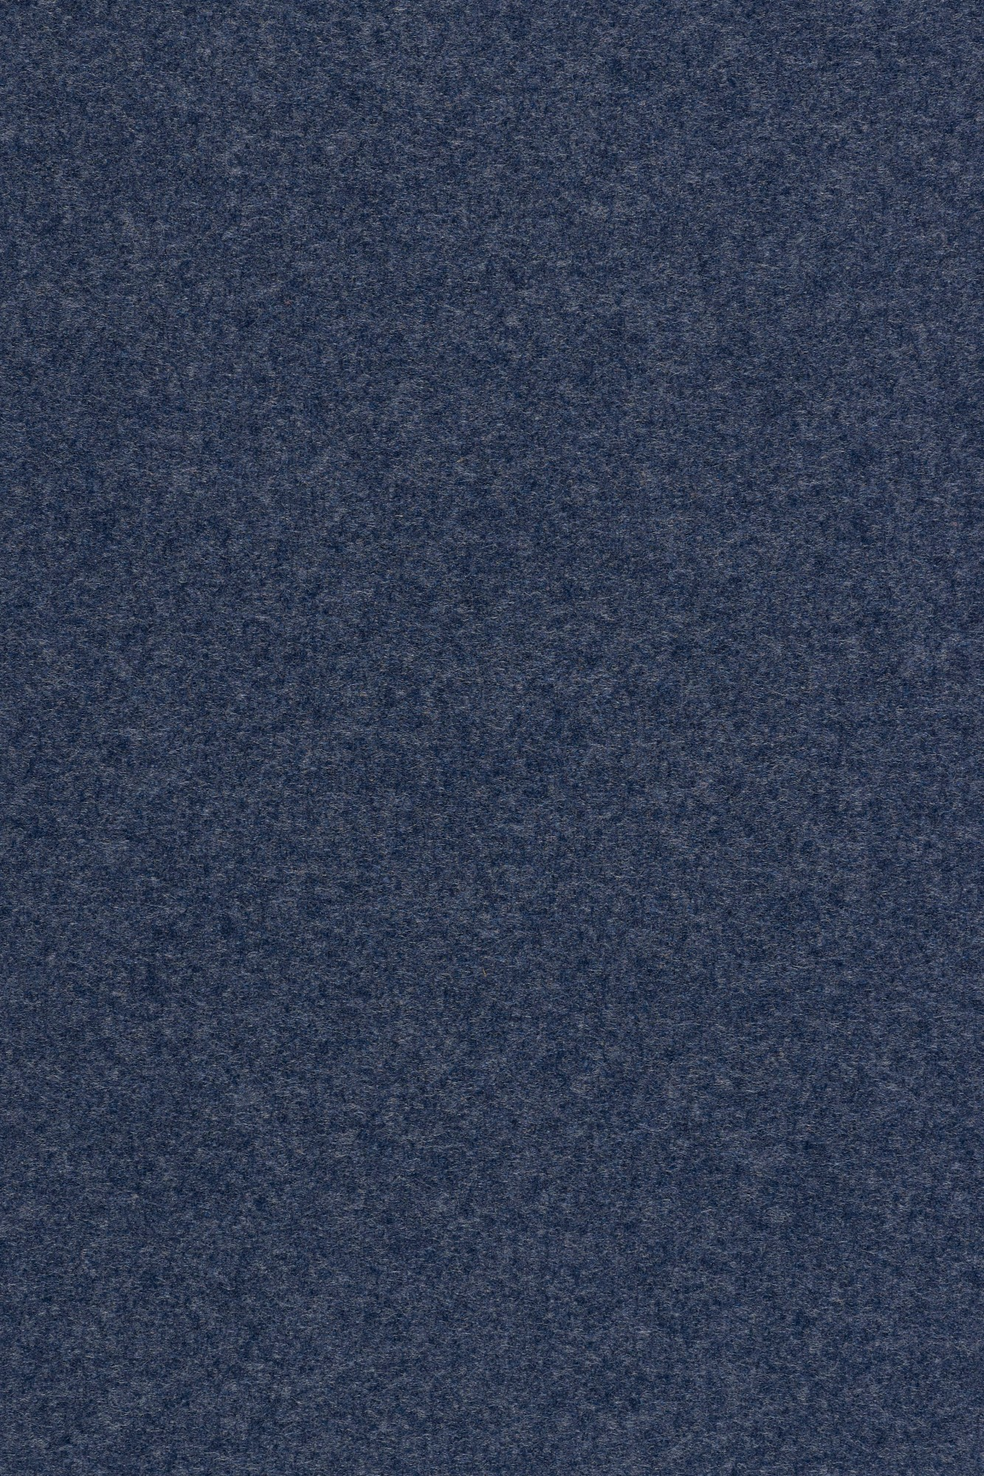 Fabric sample Divina MD 743 blue